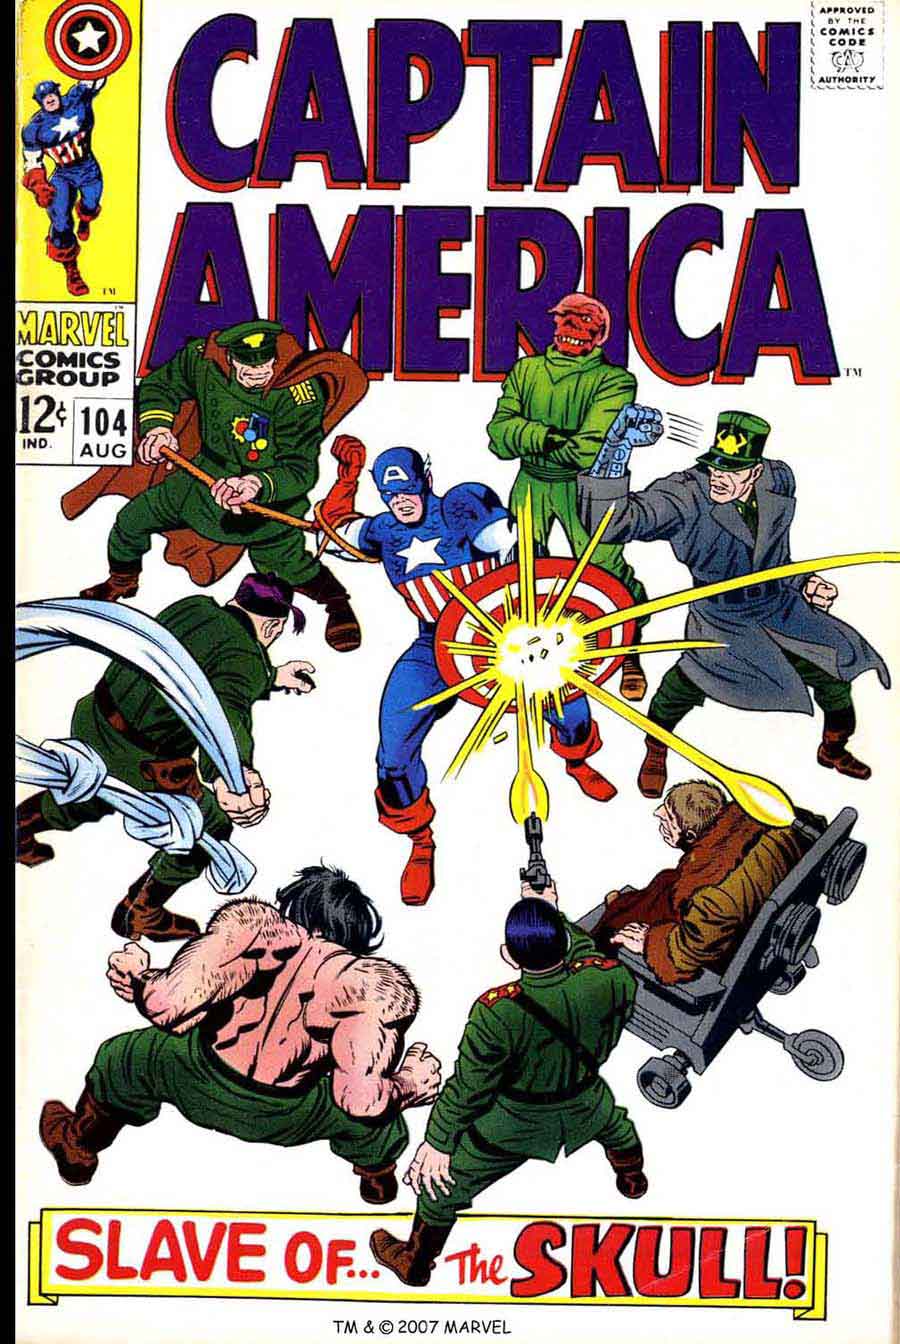 Captain America v1 #104 marvel comic book cover art by Jack Kirby